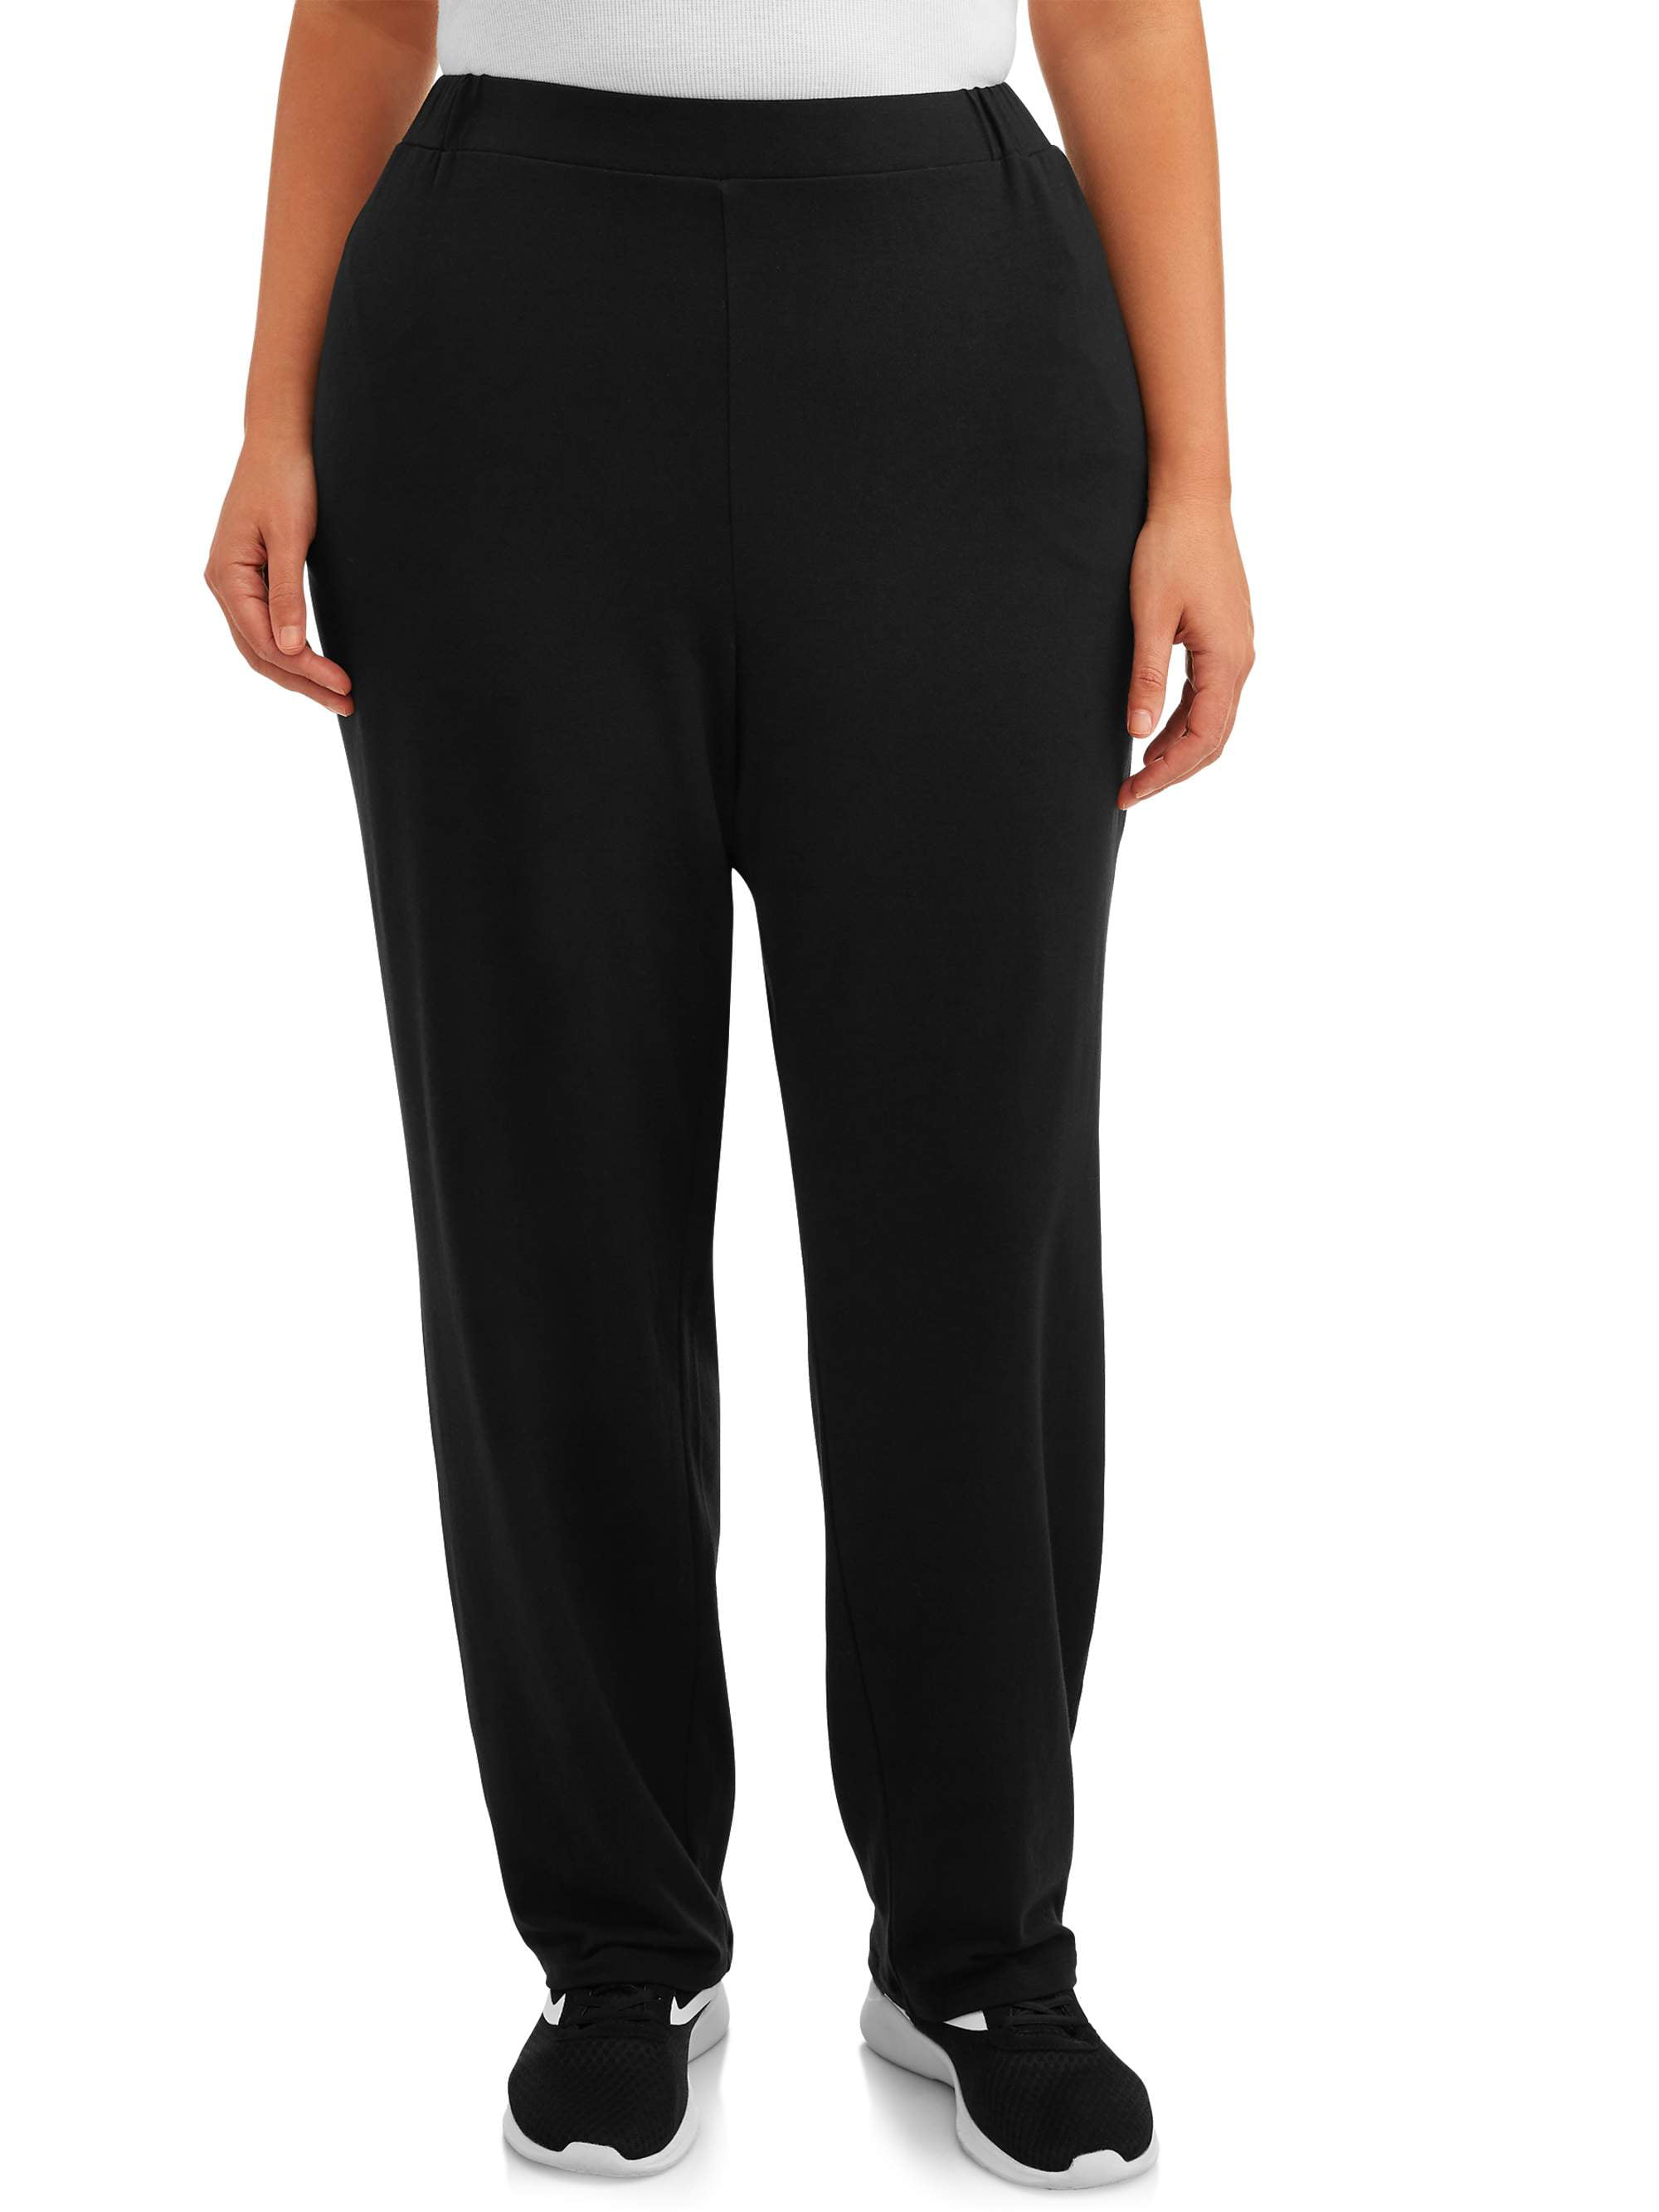 Terra & Sky Women's Plus Size Knit Pants (Regular and Petite Lengths)